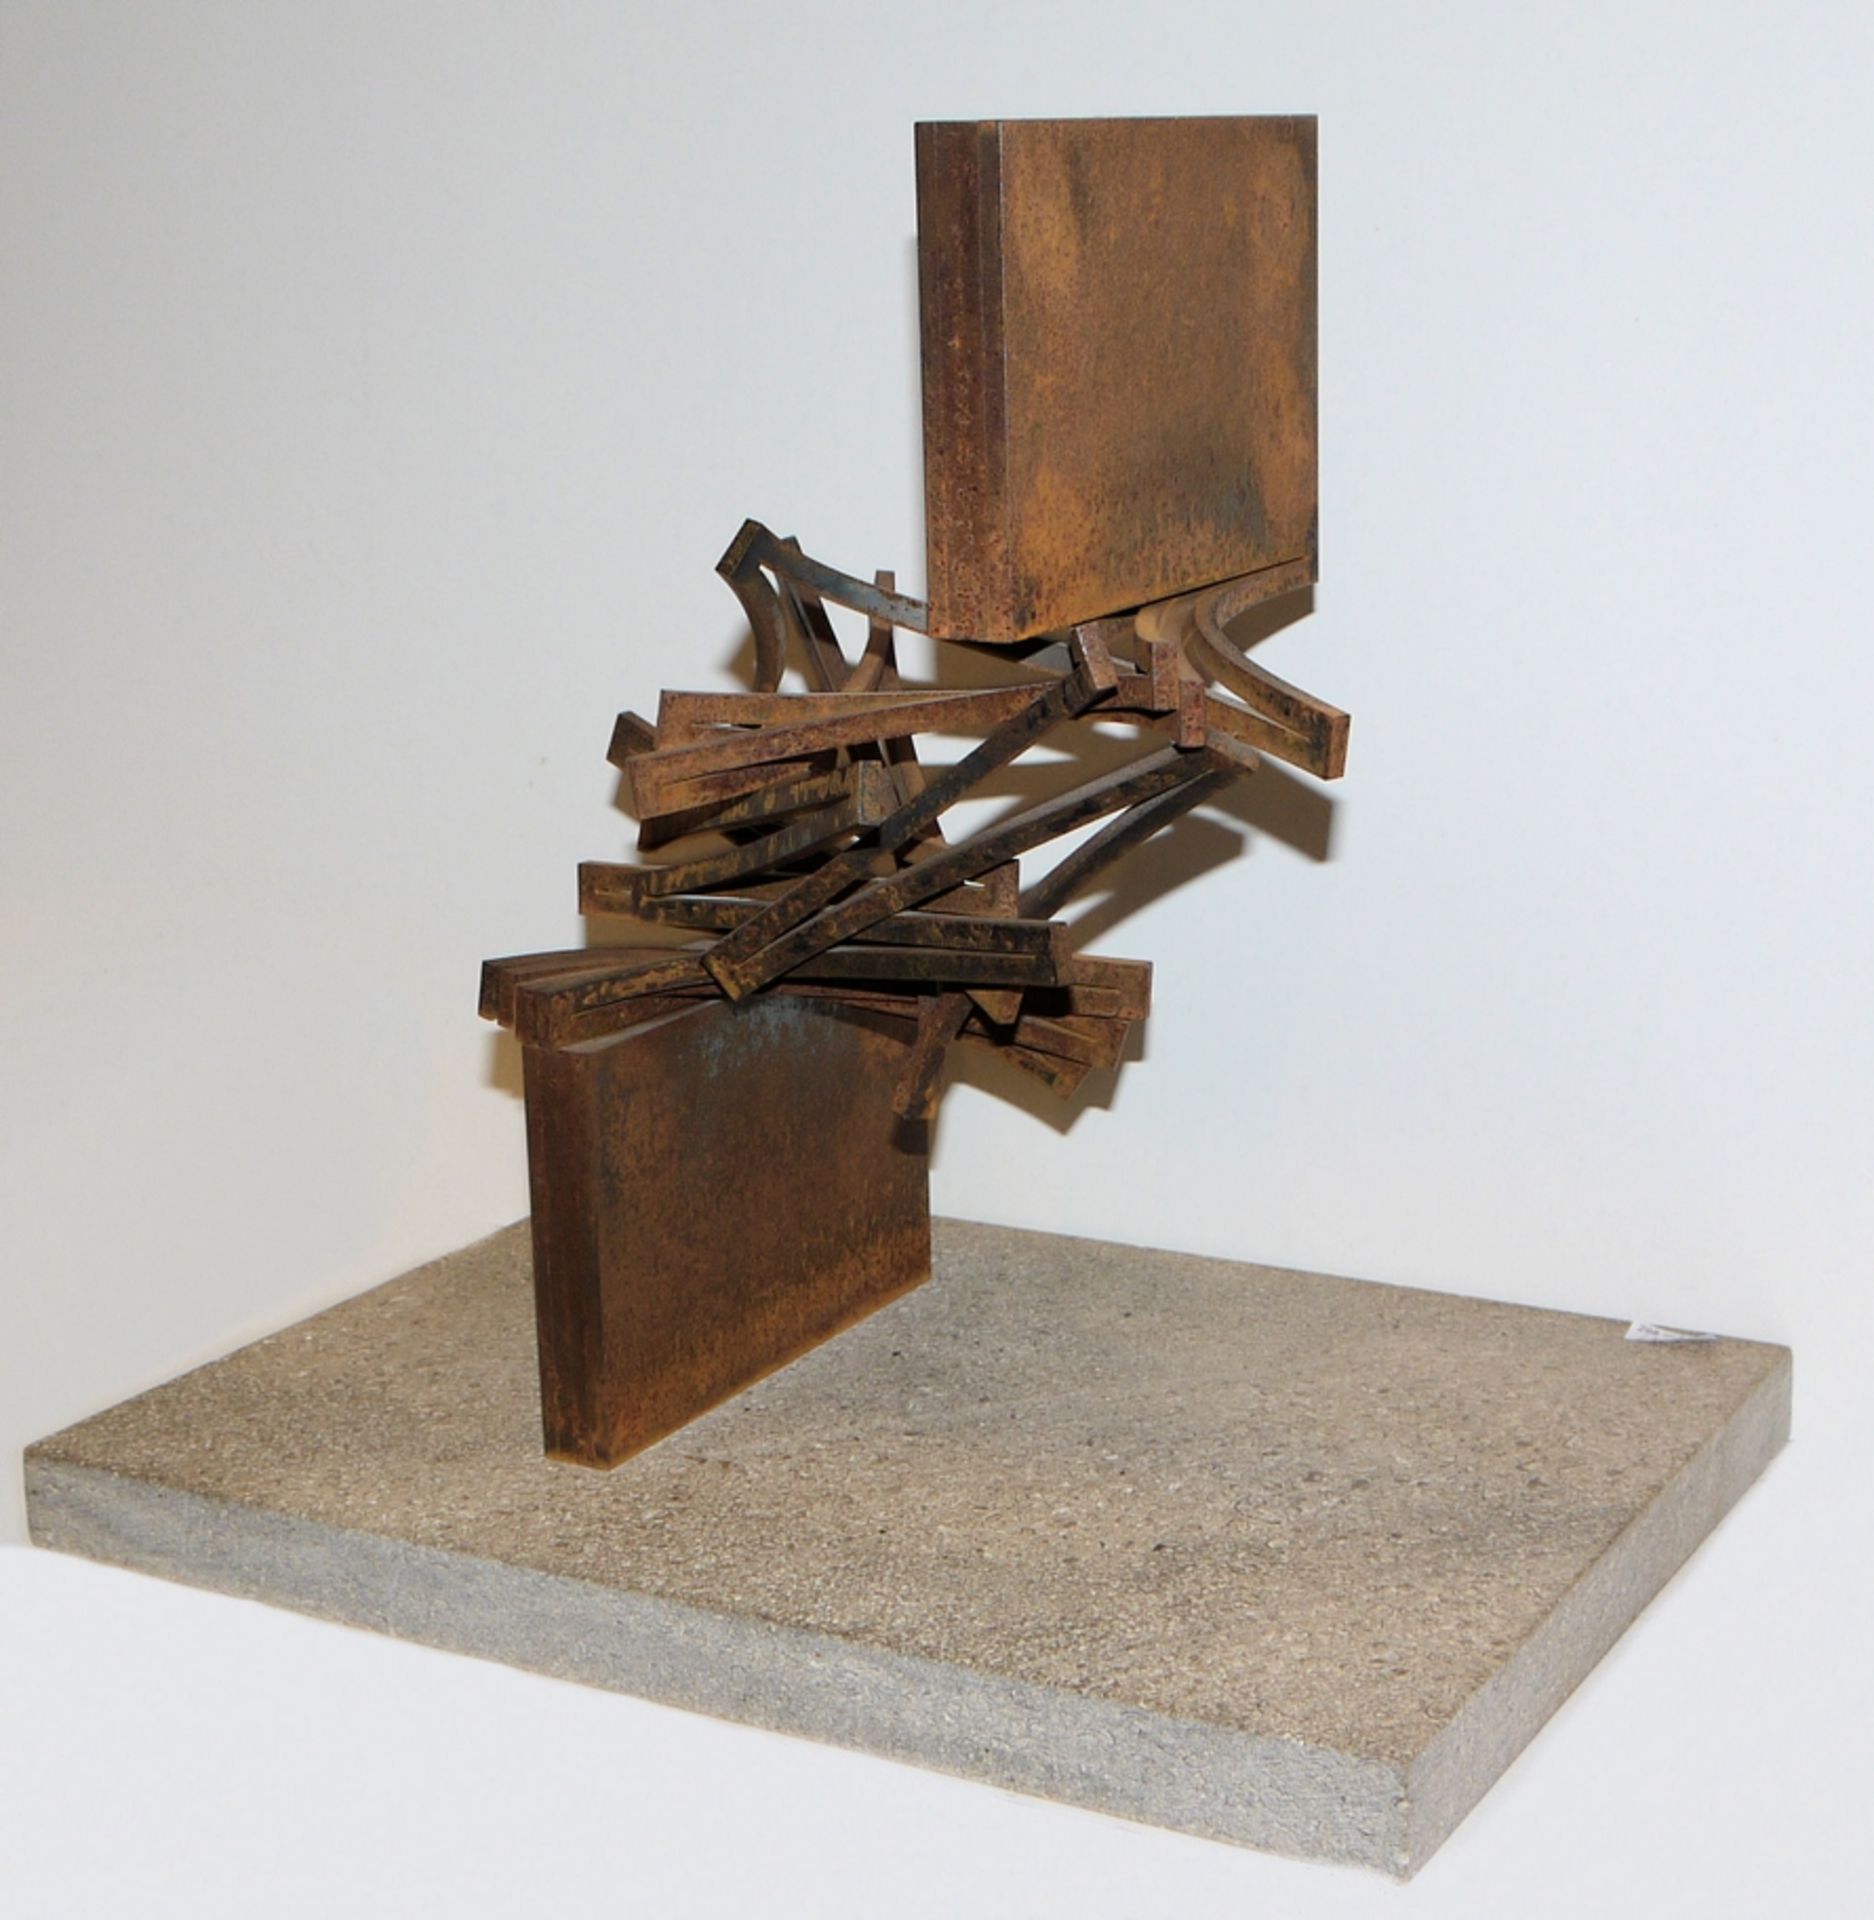 Thomas Röthel, room sculpture, steel with rust patina, with monograph "Thomas Röthel Stahlskulpture